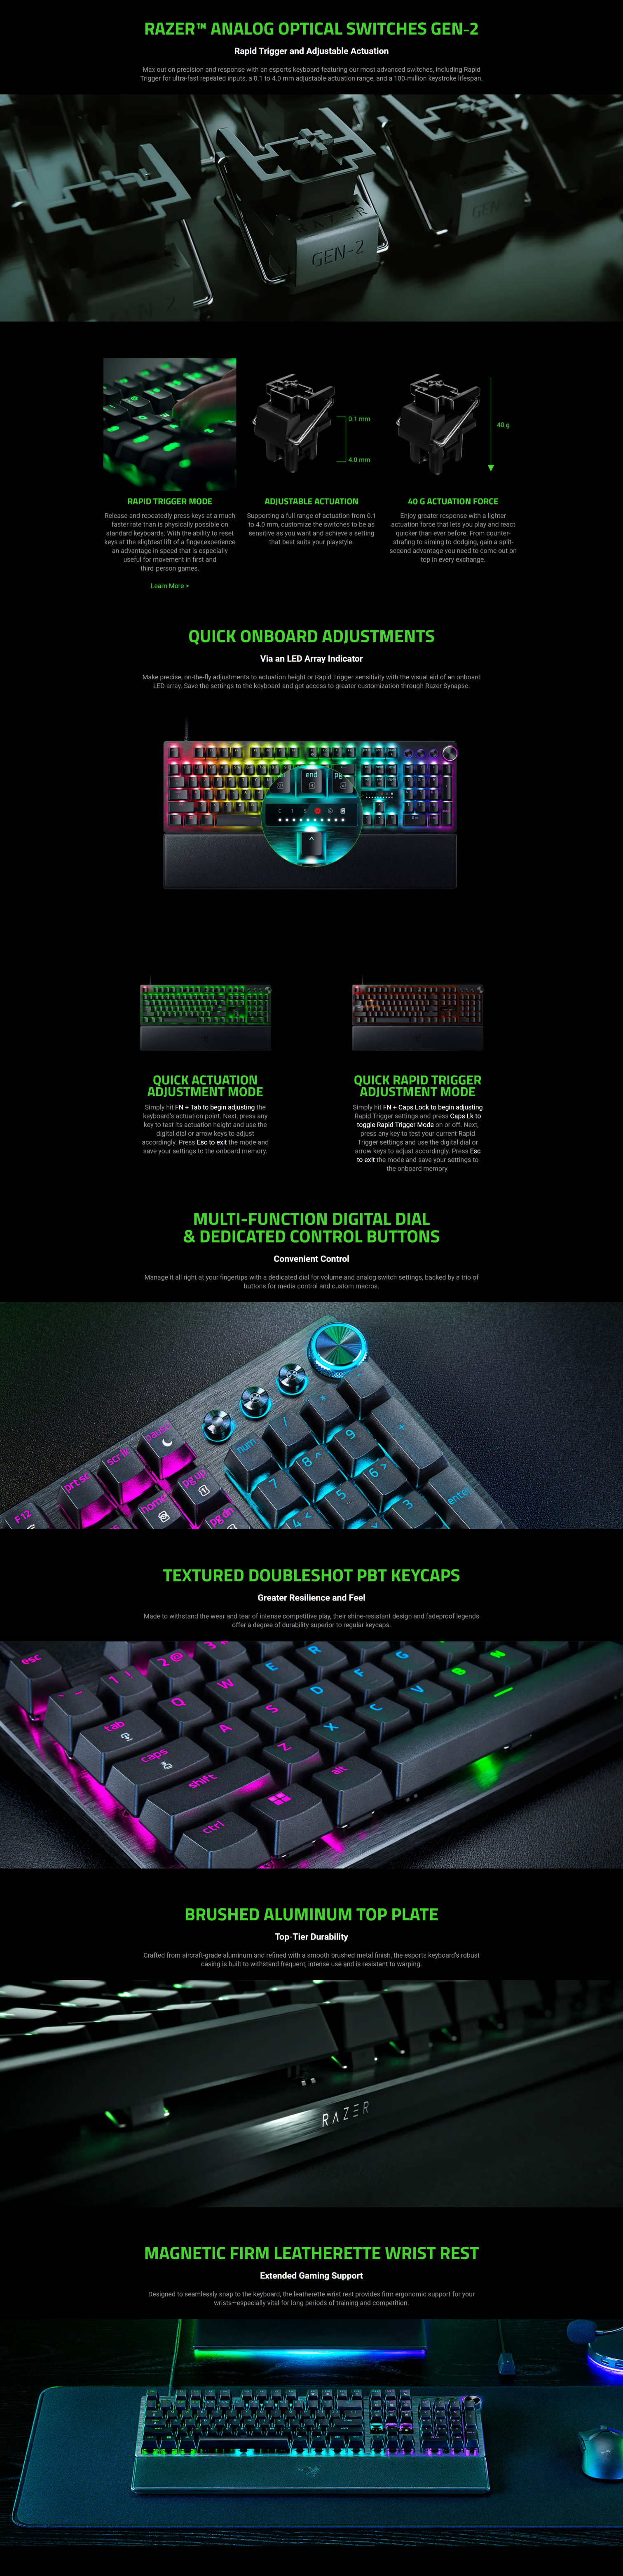 A large marketing image providing additional information about the product Razer Huntsman V3 Pro - Analog Optical eSports Keyboard - Additional alt info not provided